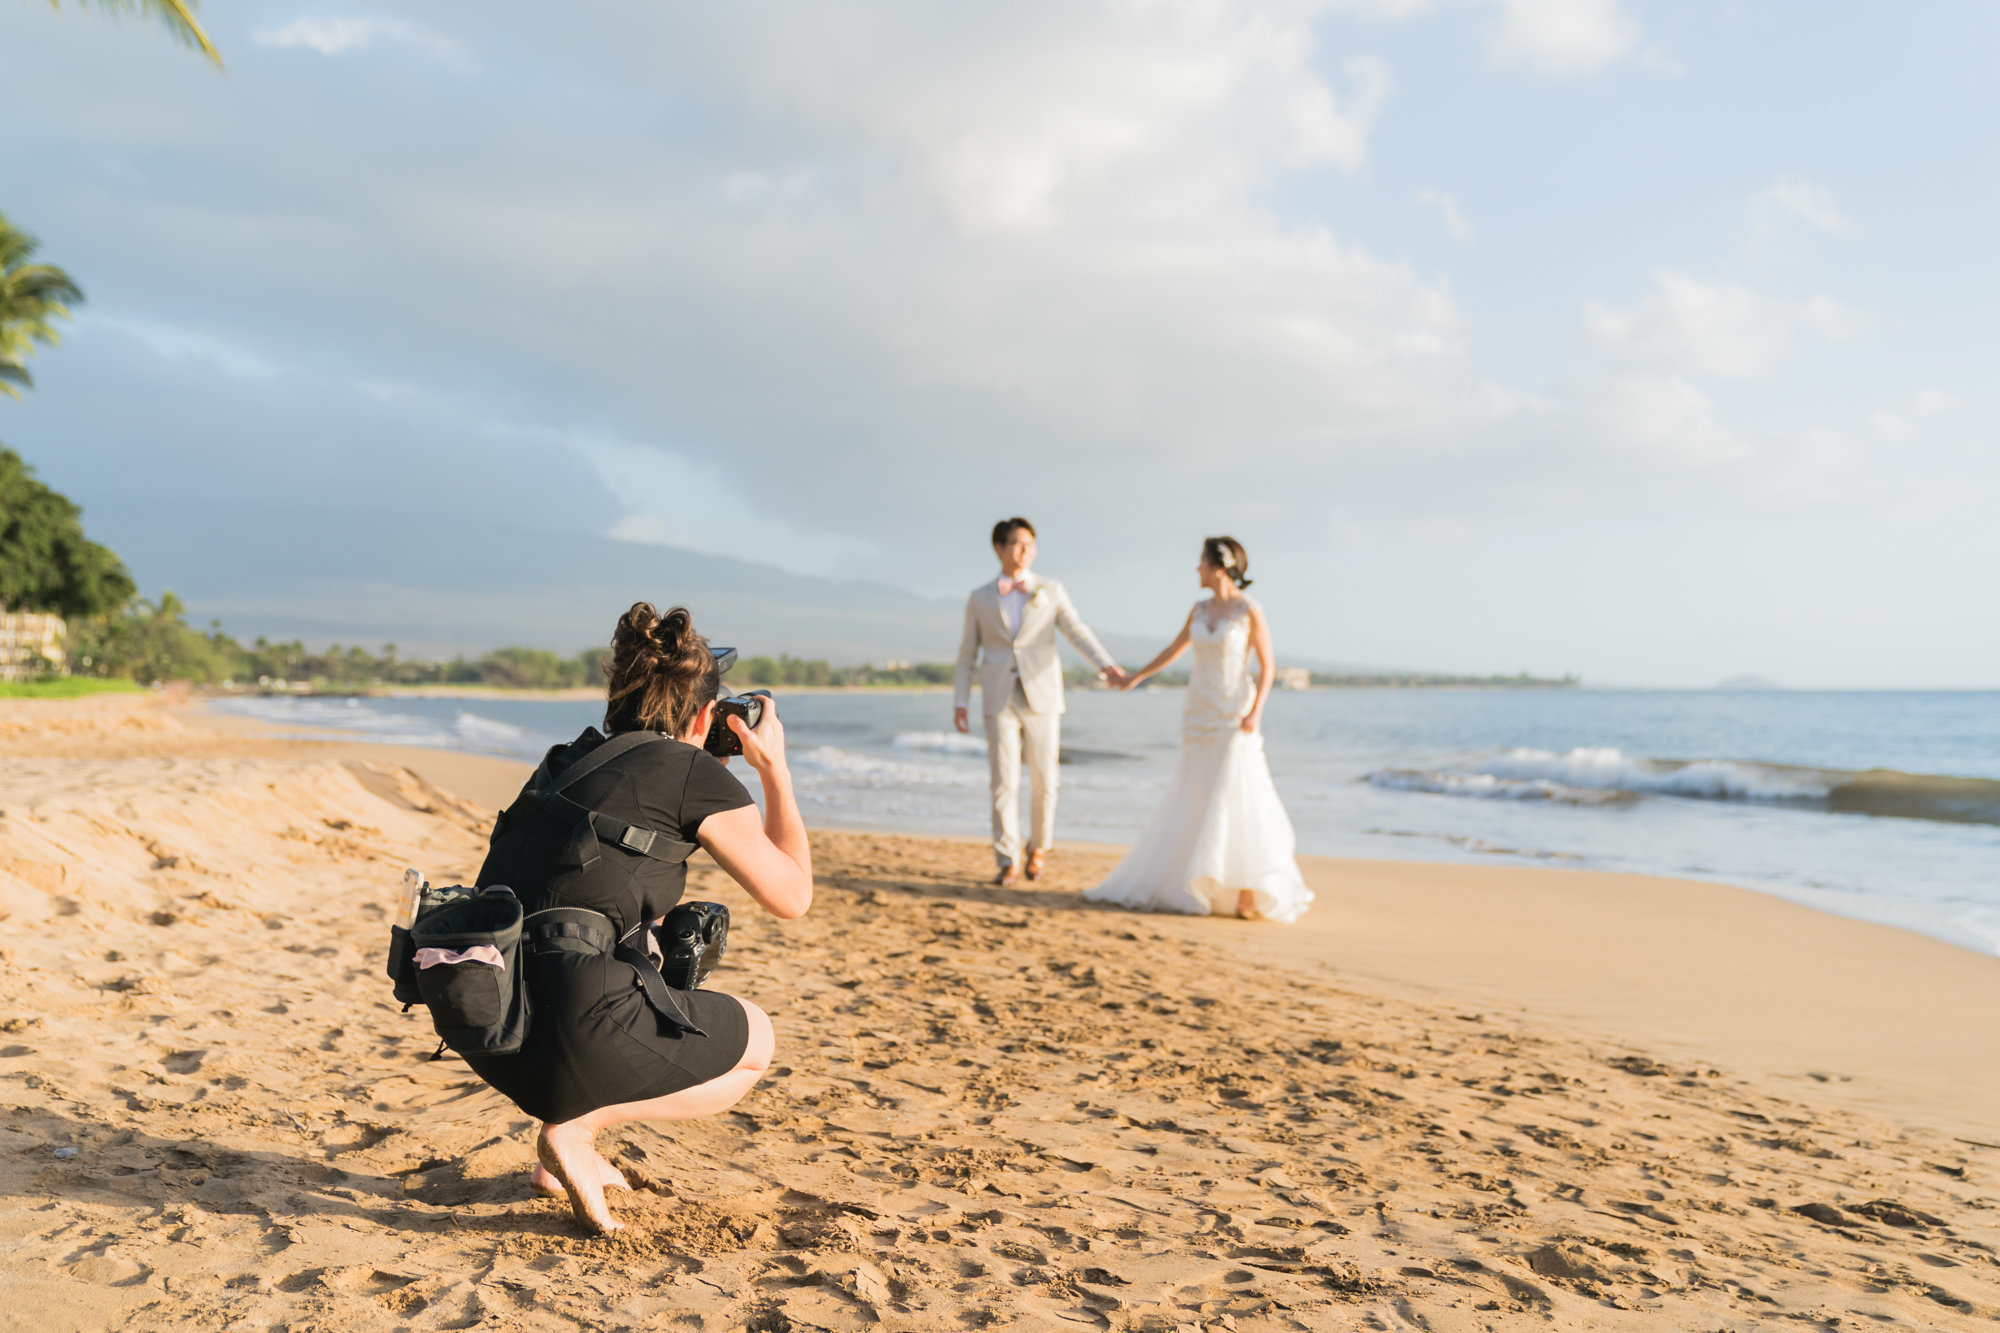 The Karma Hill Photography team of Photographers for Hawaii Weddings